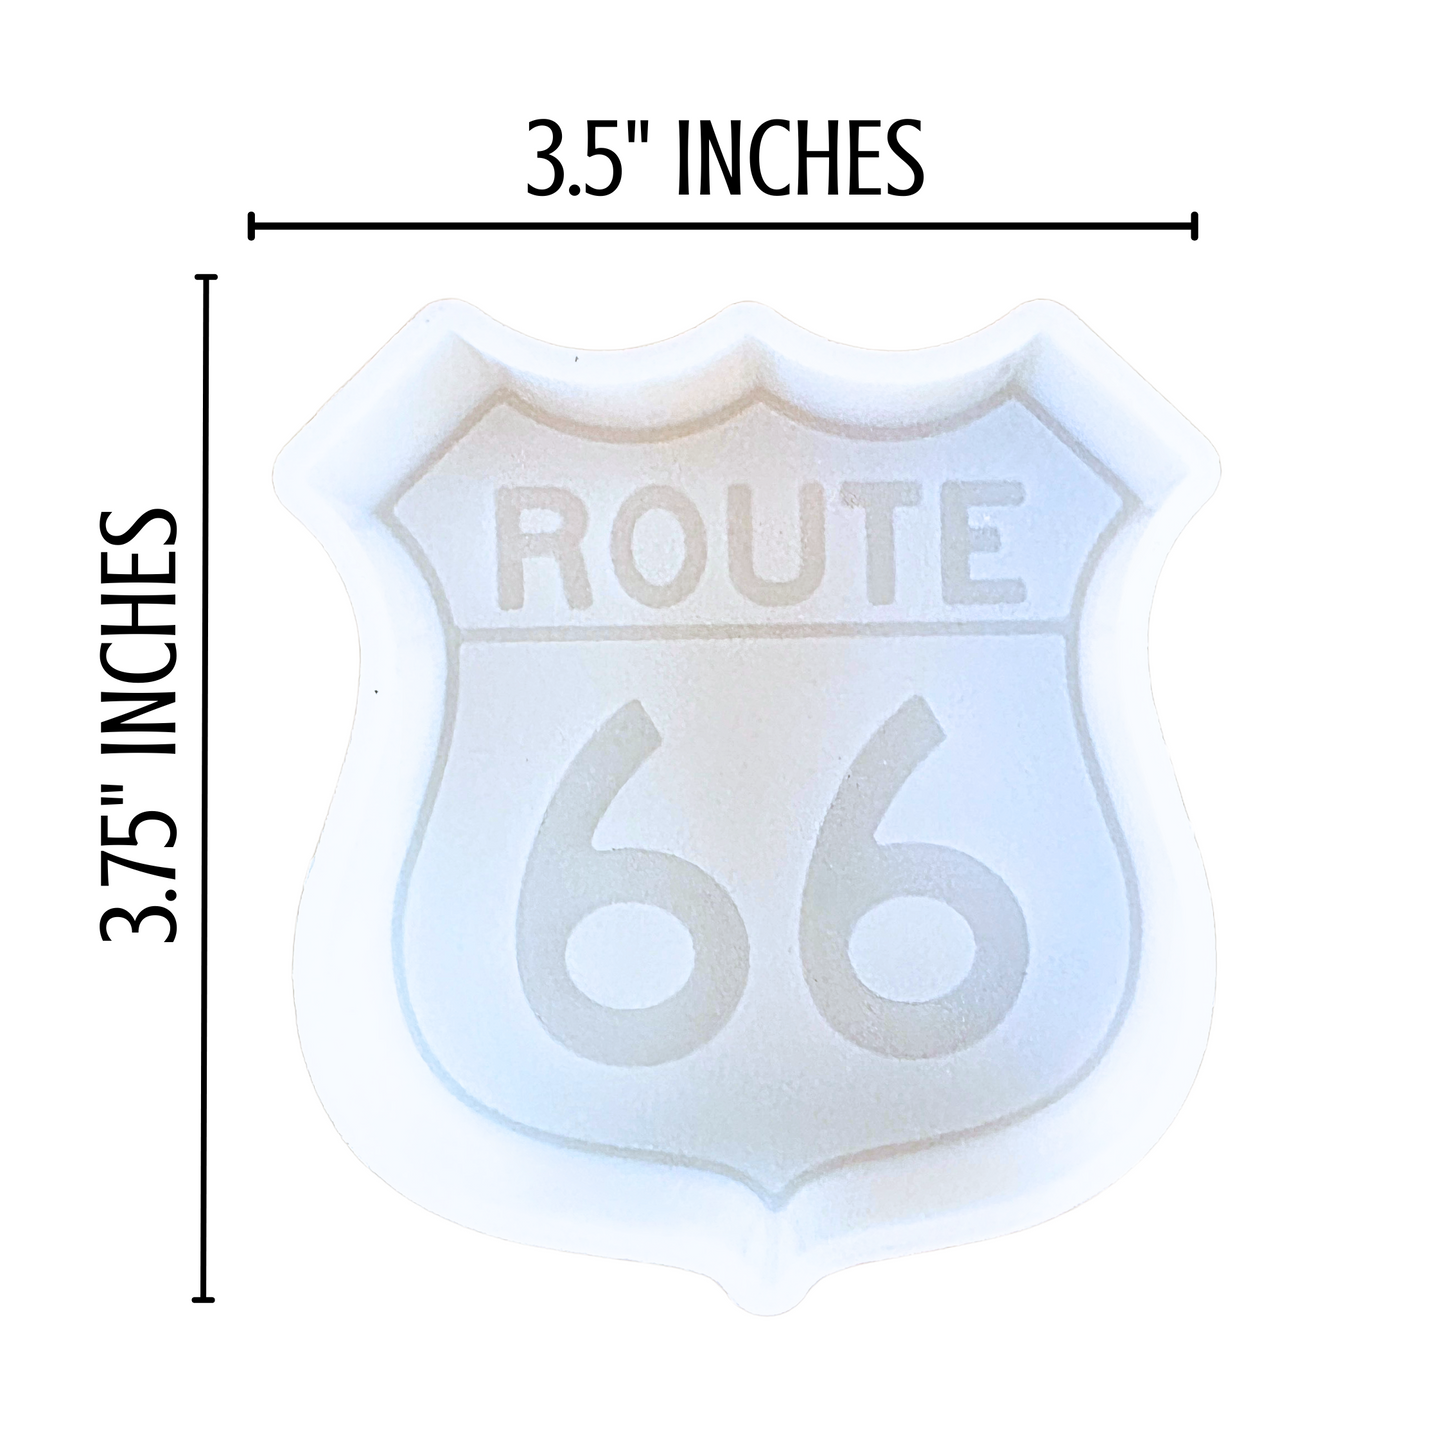 Route 66 Freshie Silicone Mold 3.75 x 3.5 x 0.8”